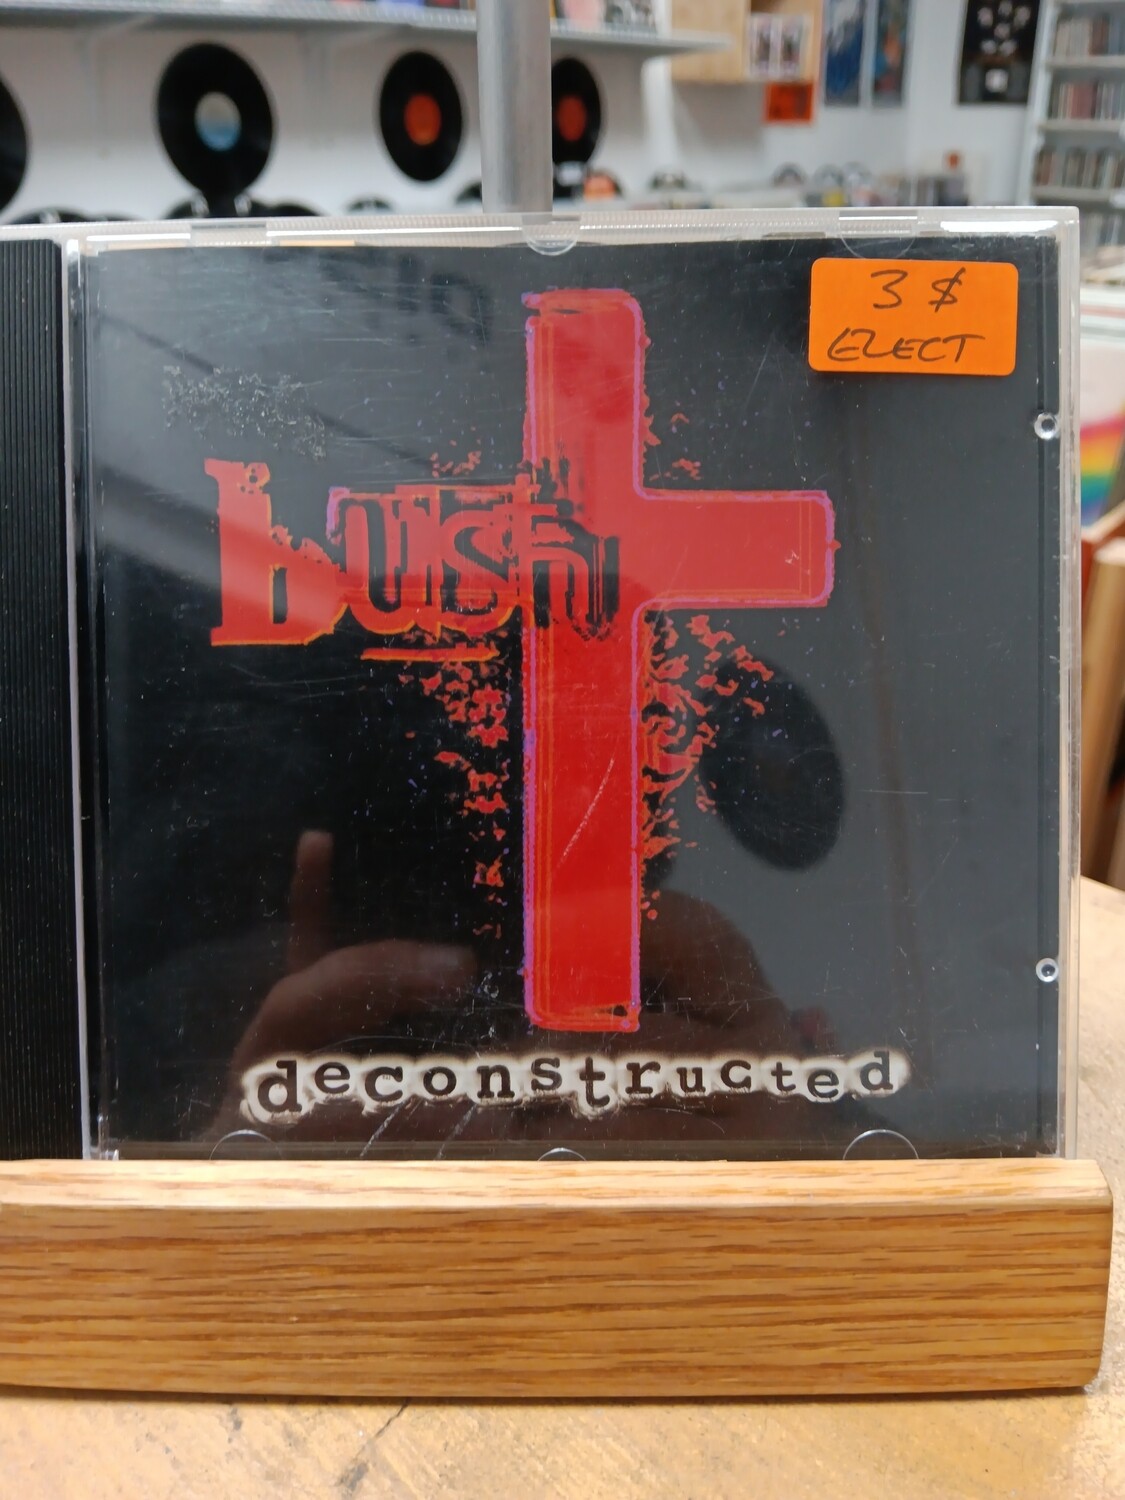 BUSH - Deconstructed (CD)